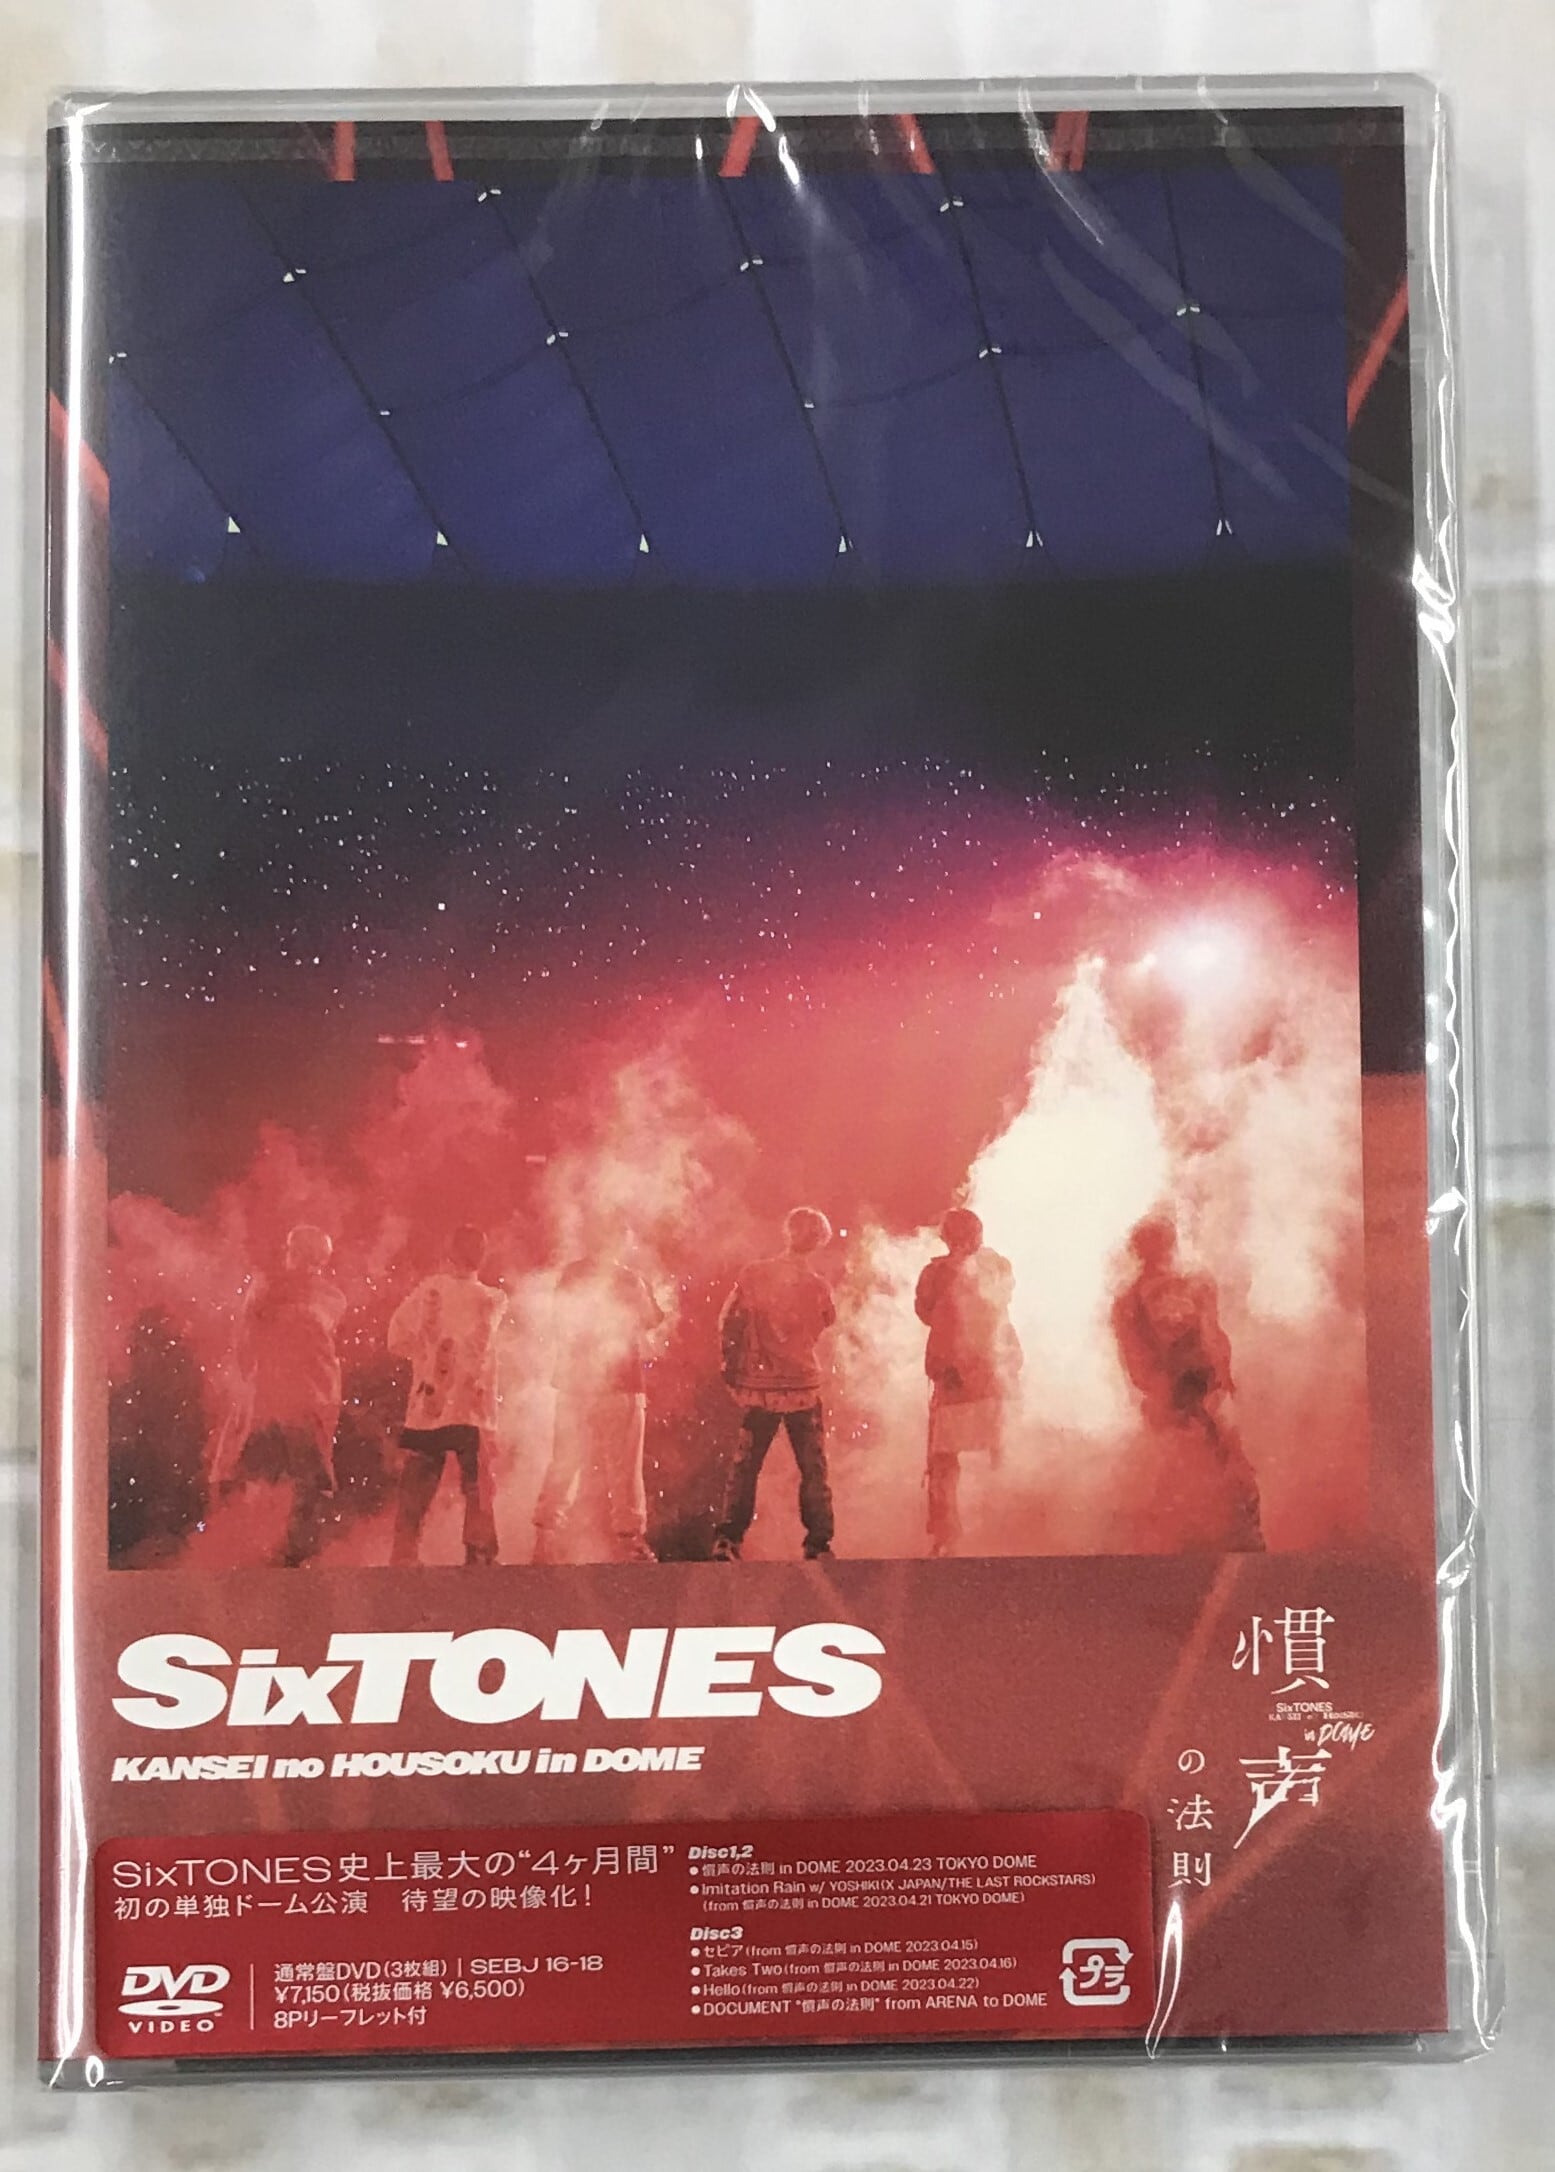 森本慎太郎SixTONES / 慣声の法則 in DOME〈初回盤DVD・3枚組〉